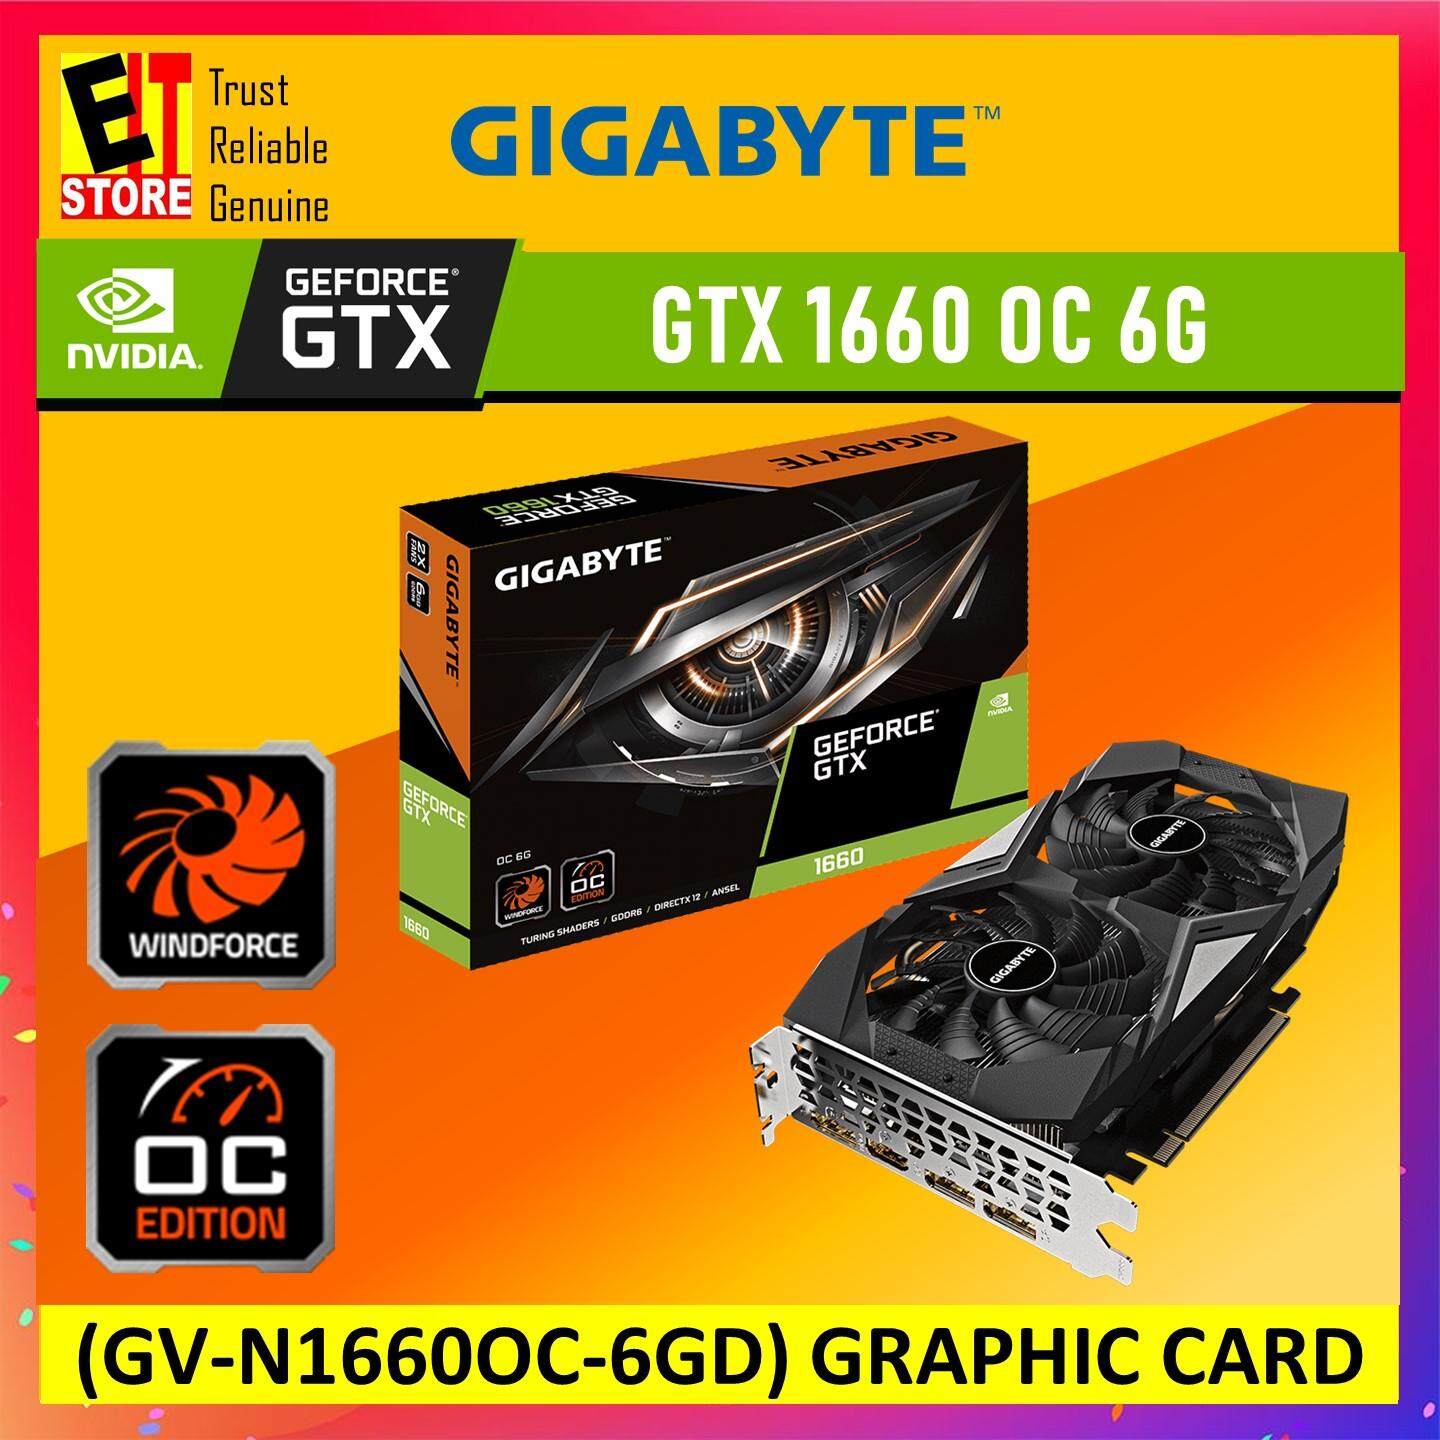 GIGABYTE GEFORCE GTX 1660 OC 6G GRAPHIC CARD (GV-N1660OC-6GD) | Lazada